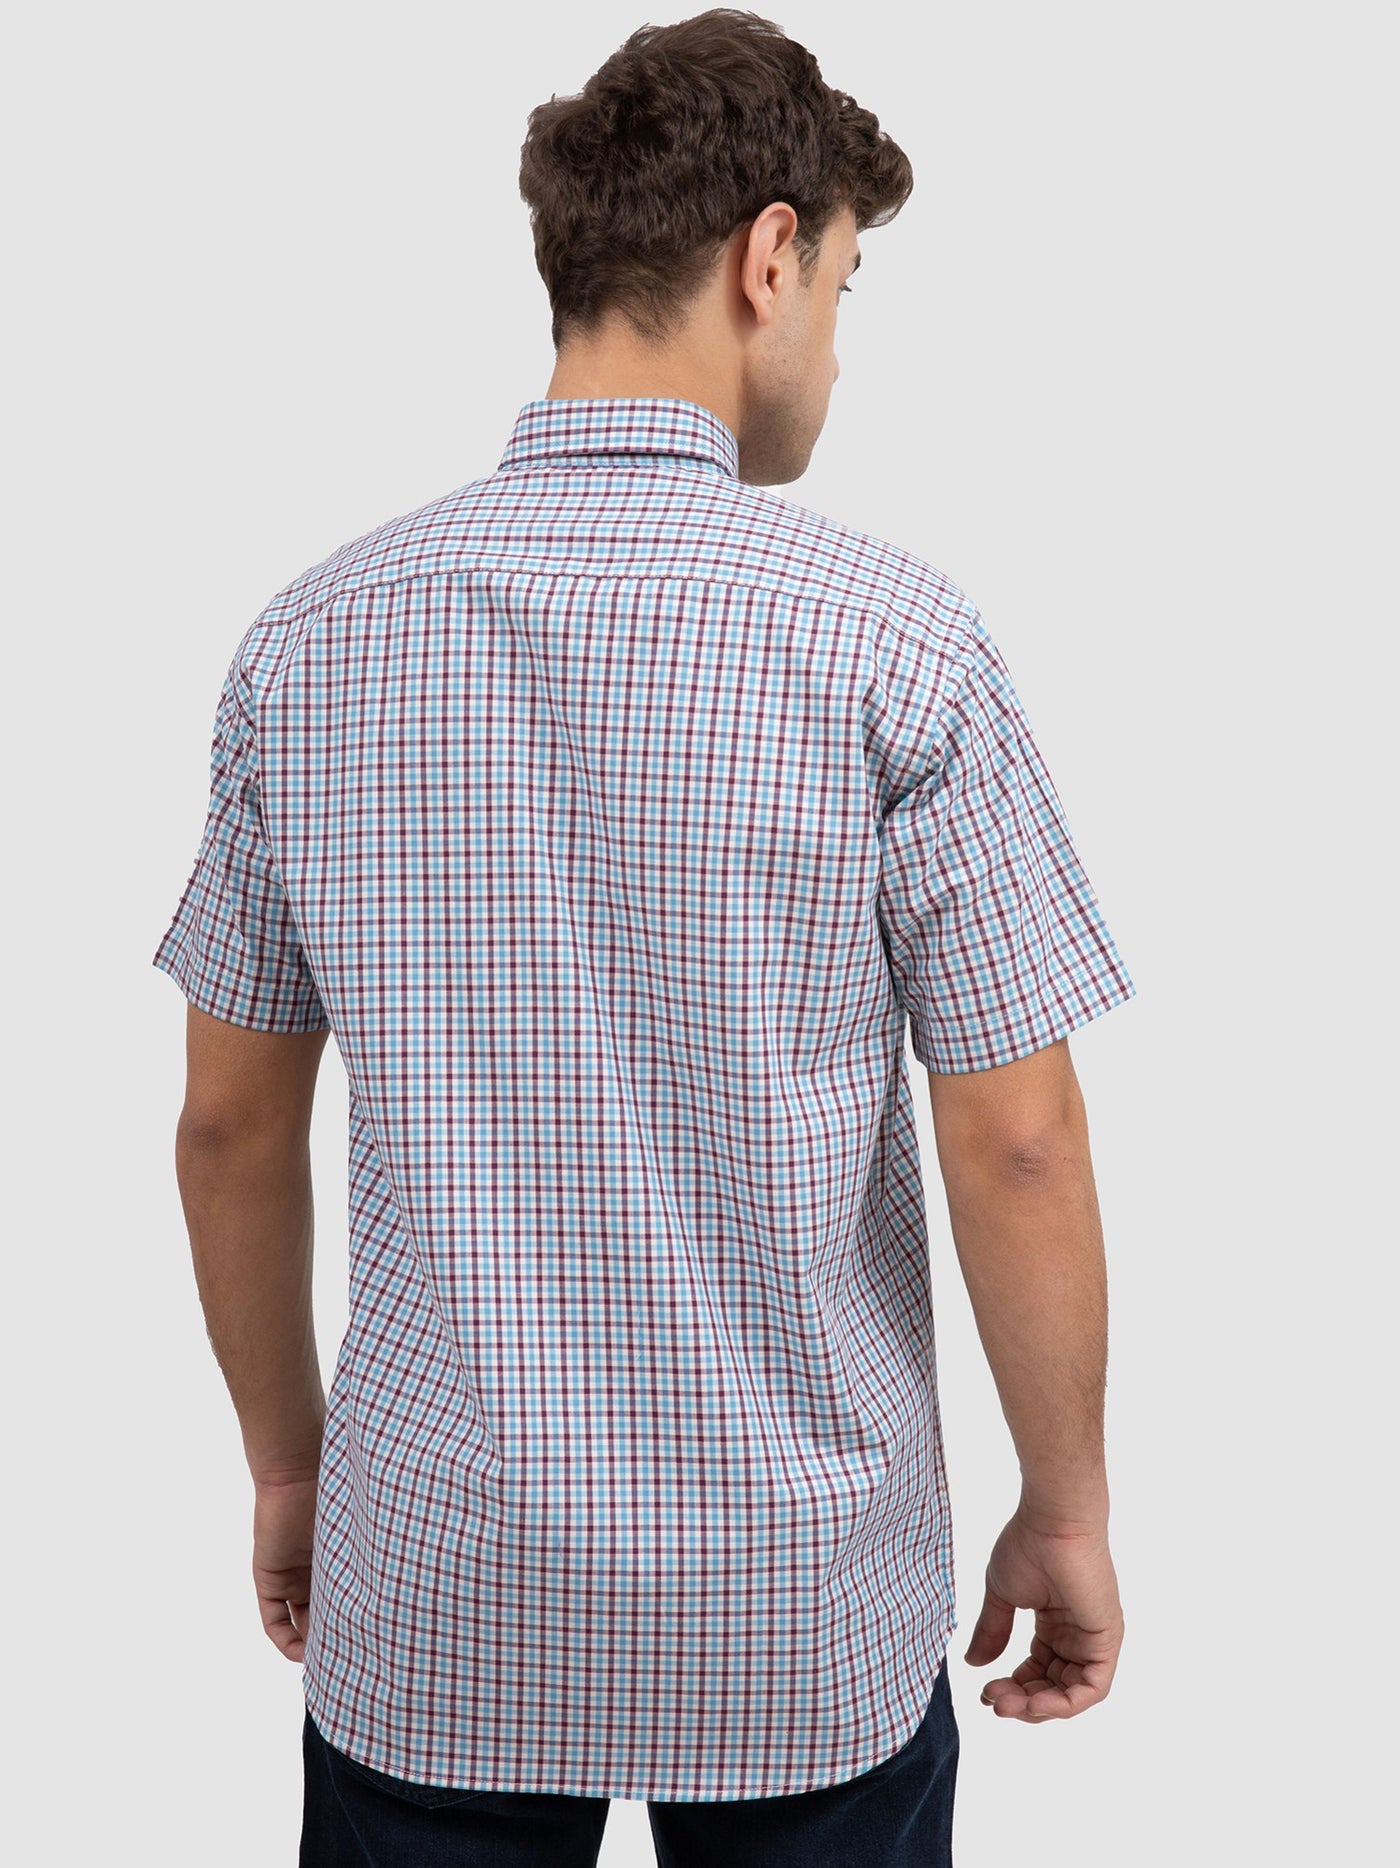 Premoda Mens Short Sleeve Checked Shirt